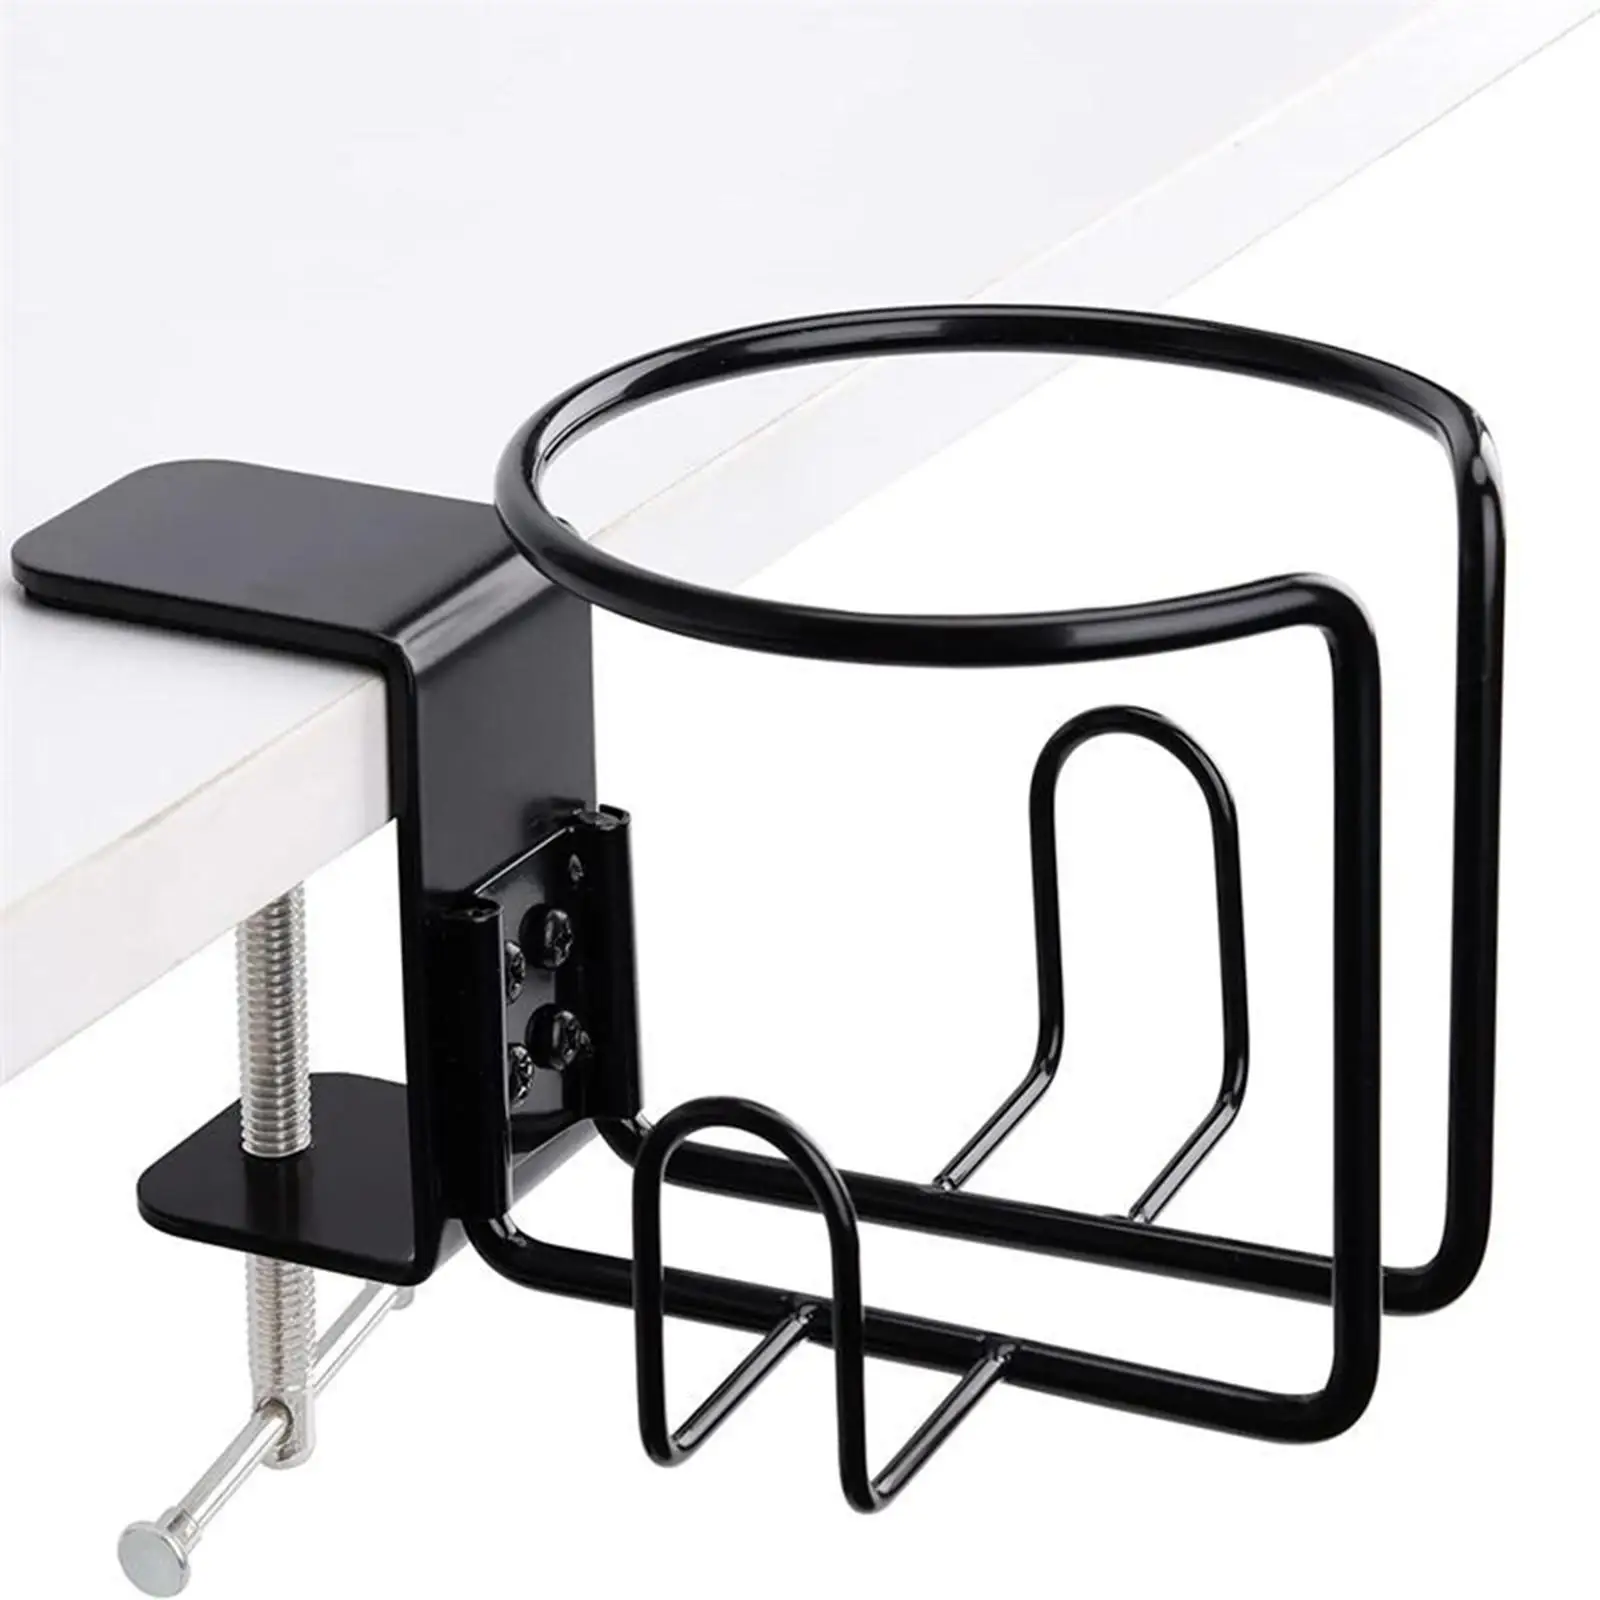 Anti Spill Cup Holder with Headphone Hanger Large Gaming Desk Accessories Black Horizontal or Vertical Mount Desktop Organizer